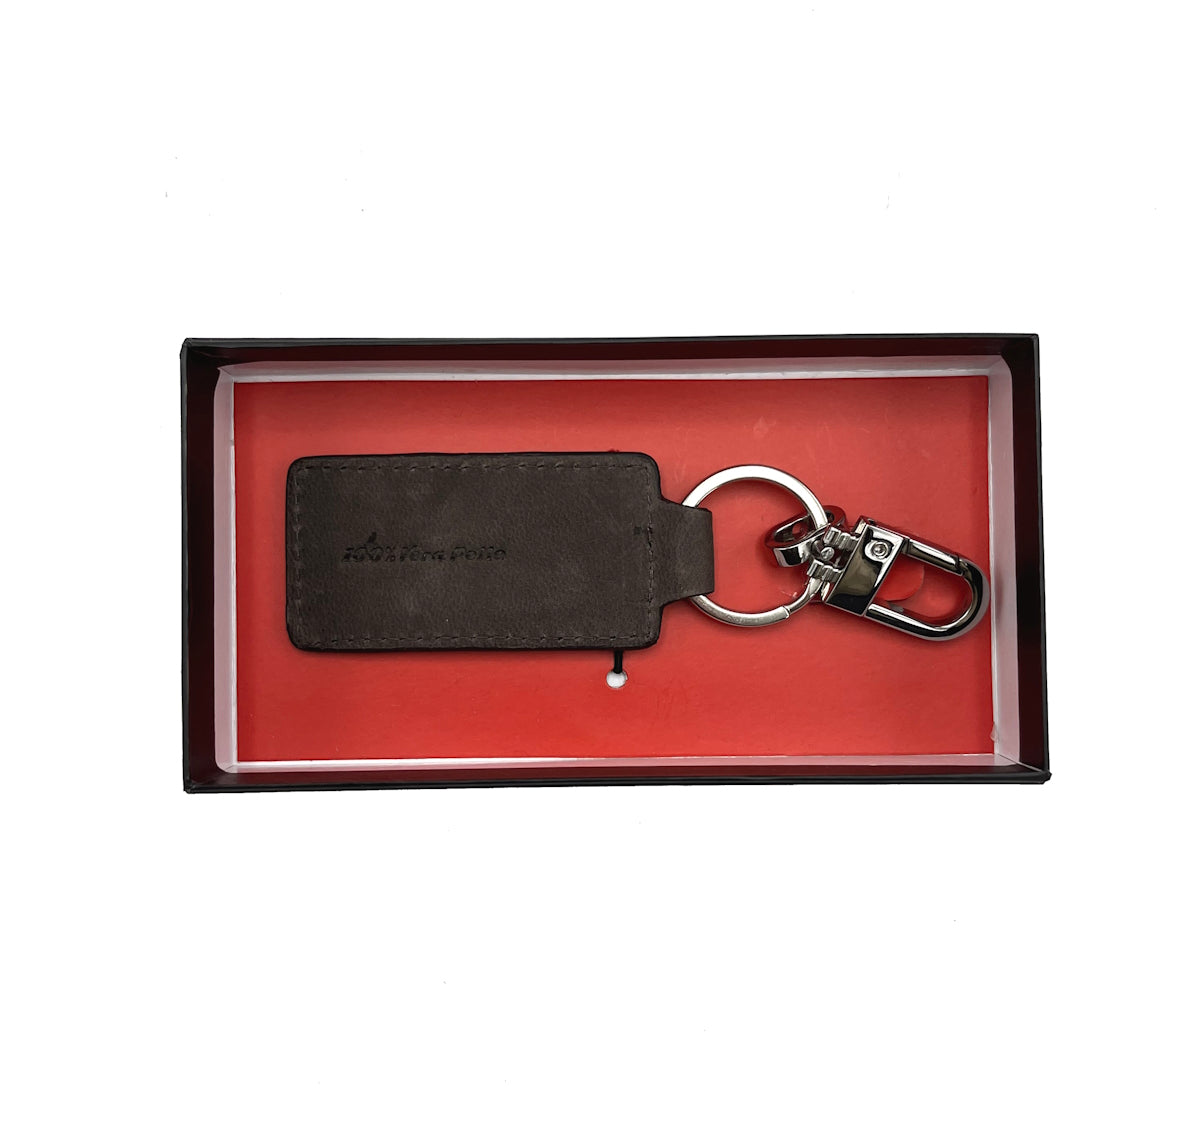 Genuine leather key chain, Wampum, art. PCK38WAM.425